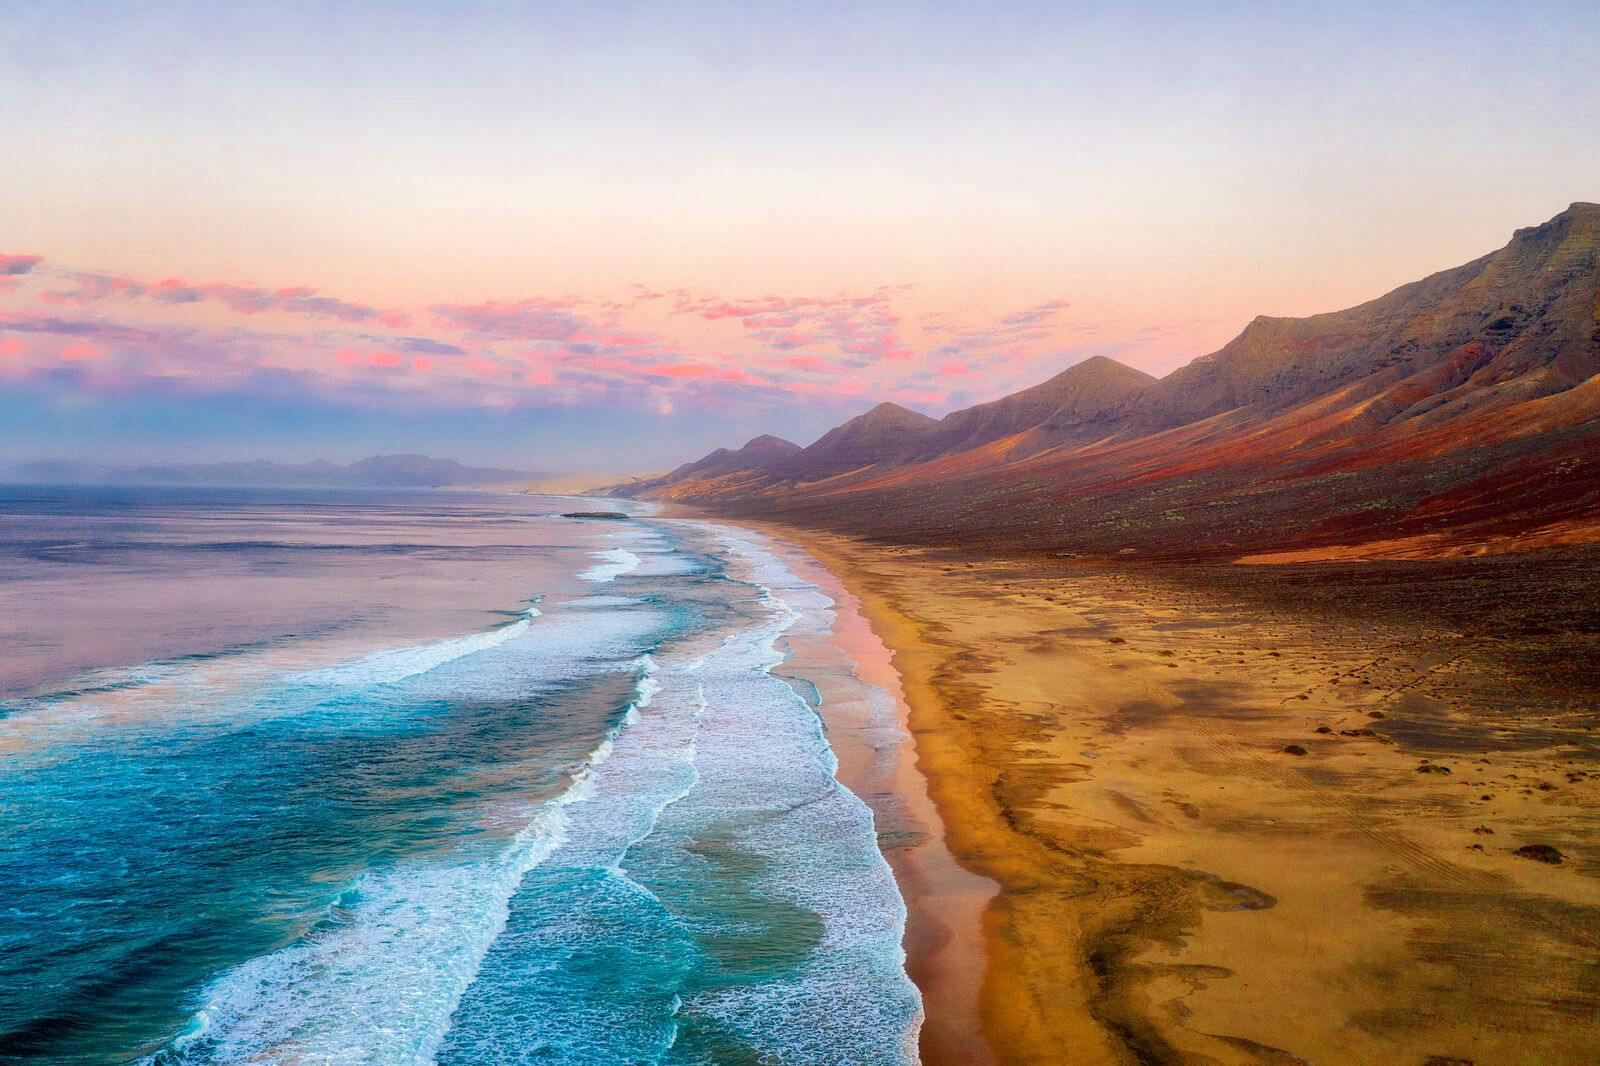 Fuerteventura coastline with white sandy beach and volcanic red cliffs